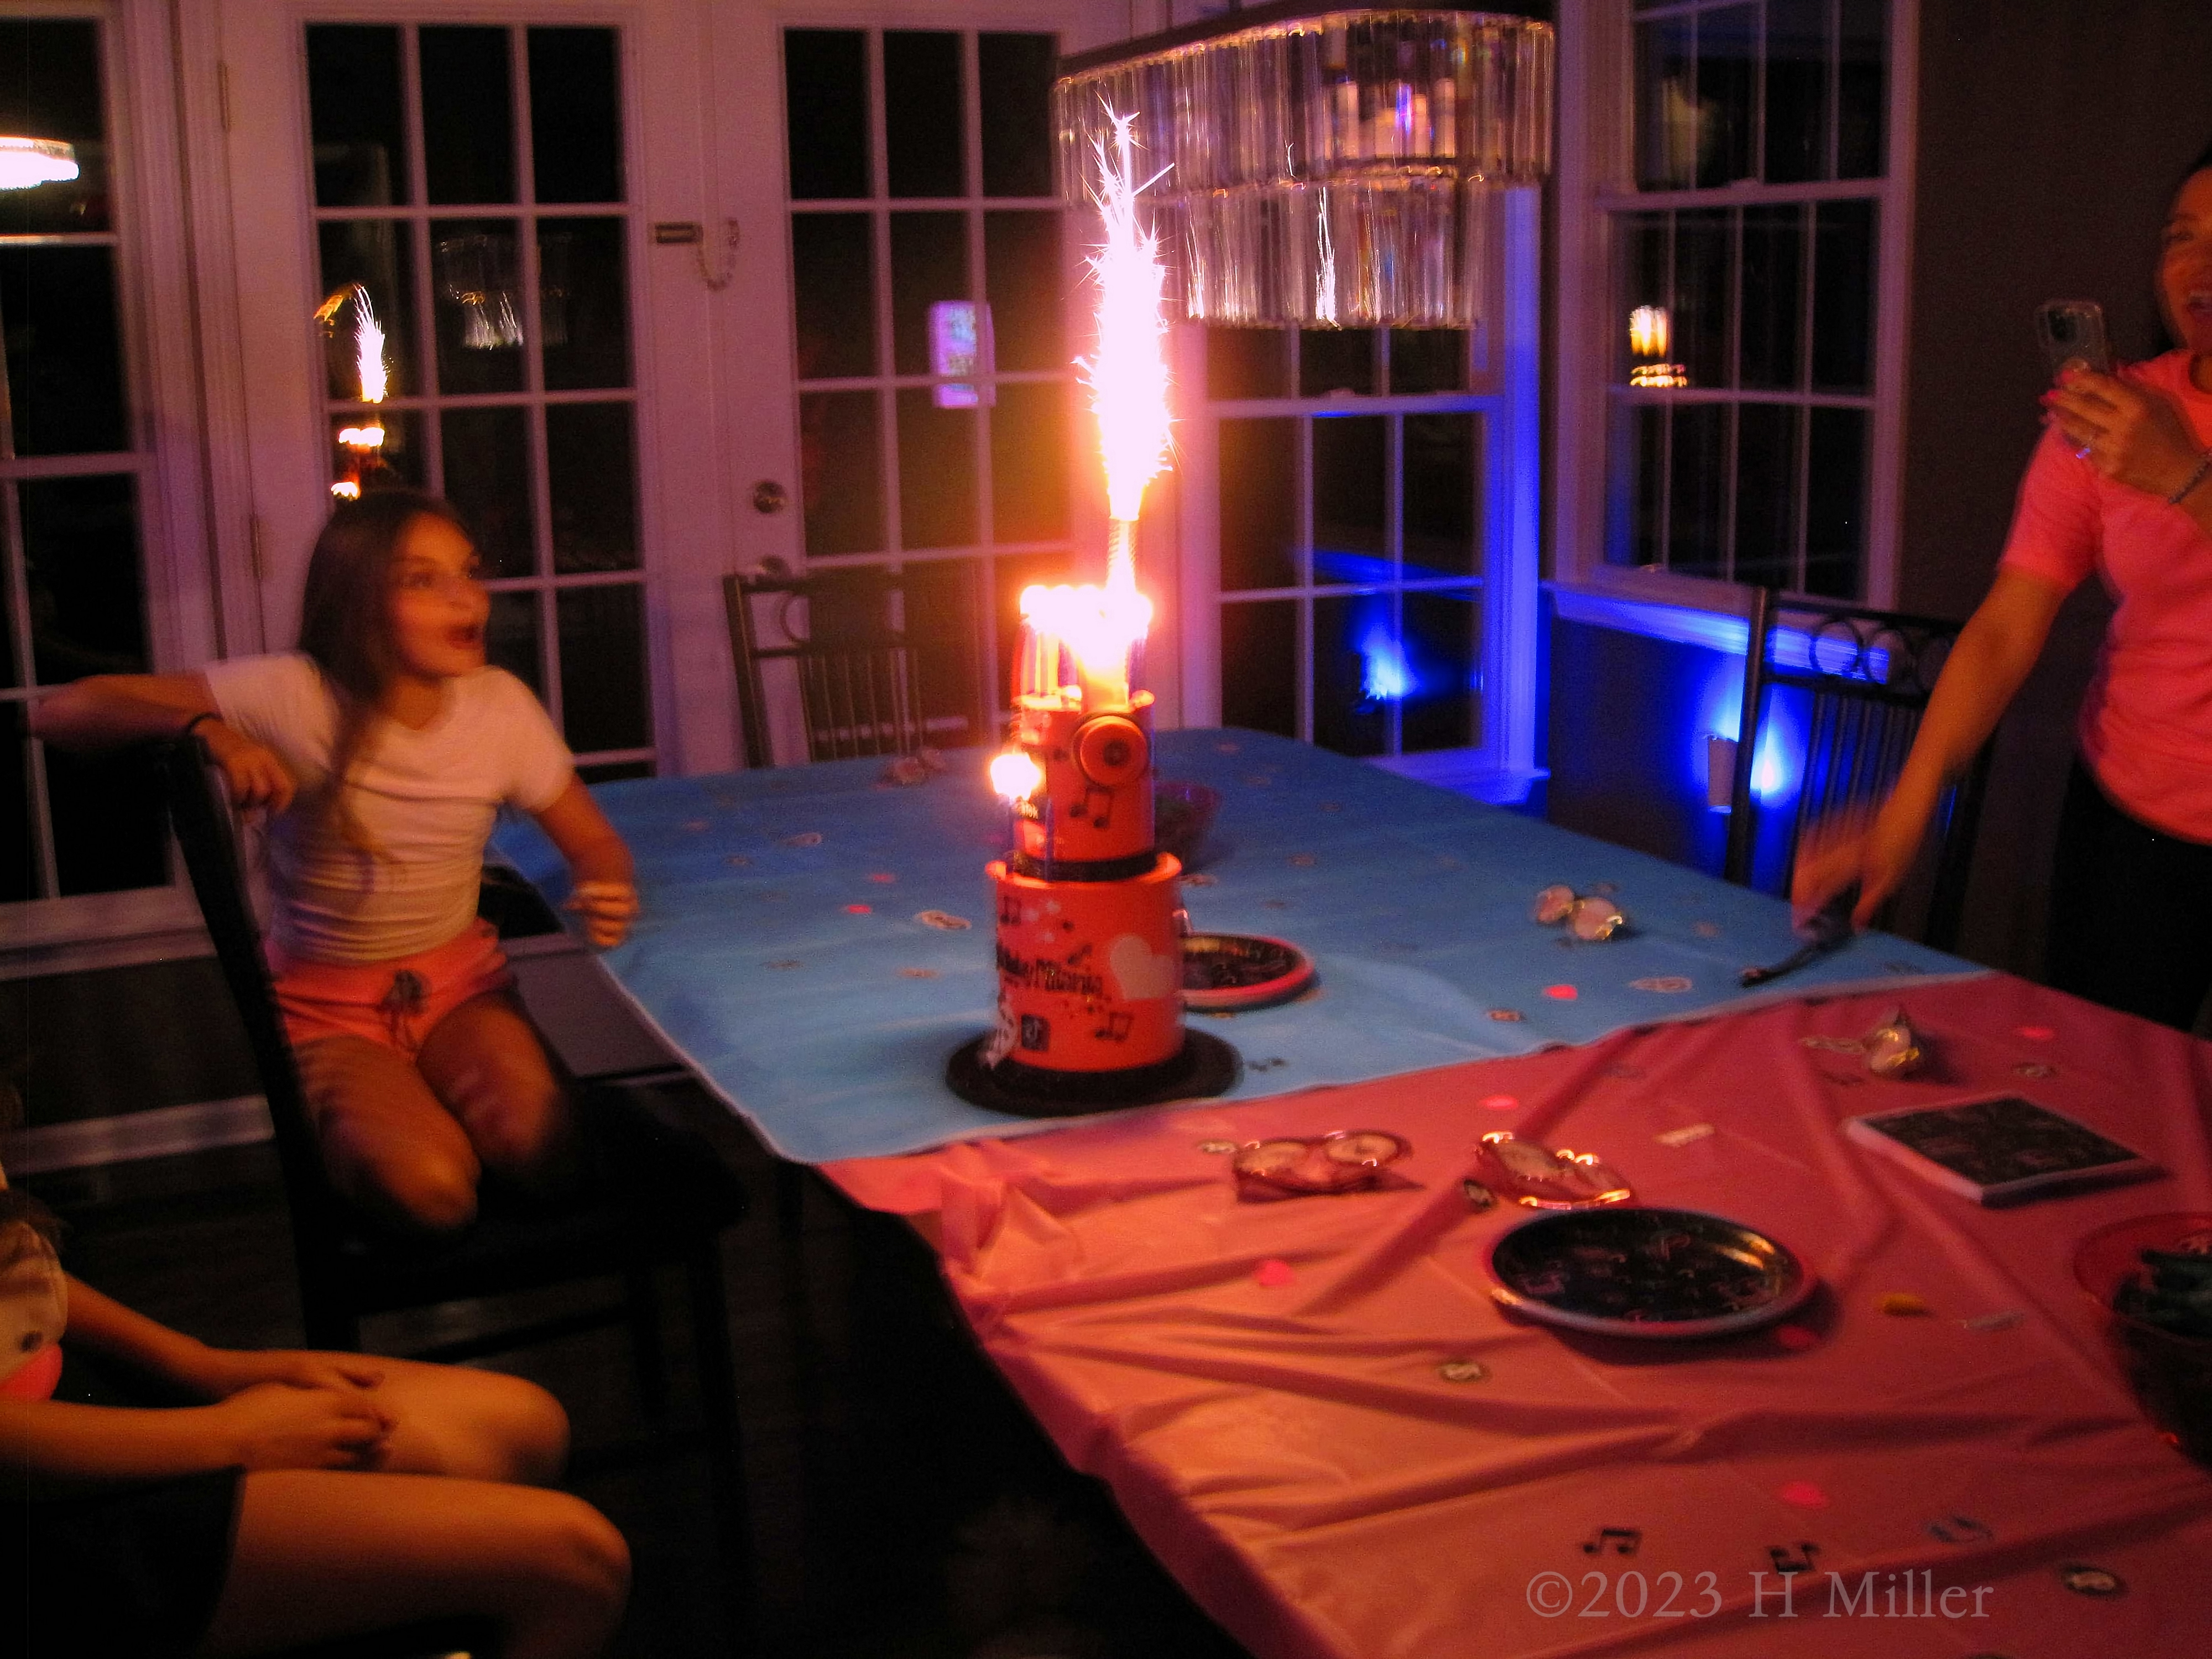 Milania's 11th Kids Spa Birthday Party 